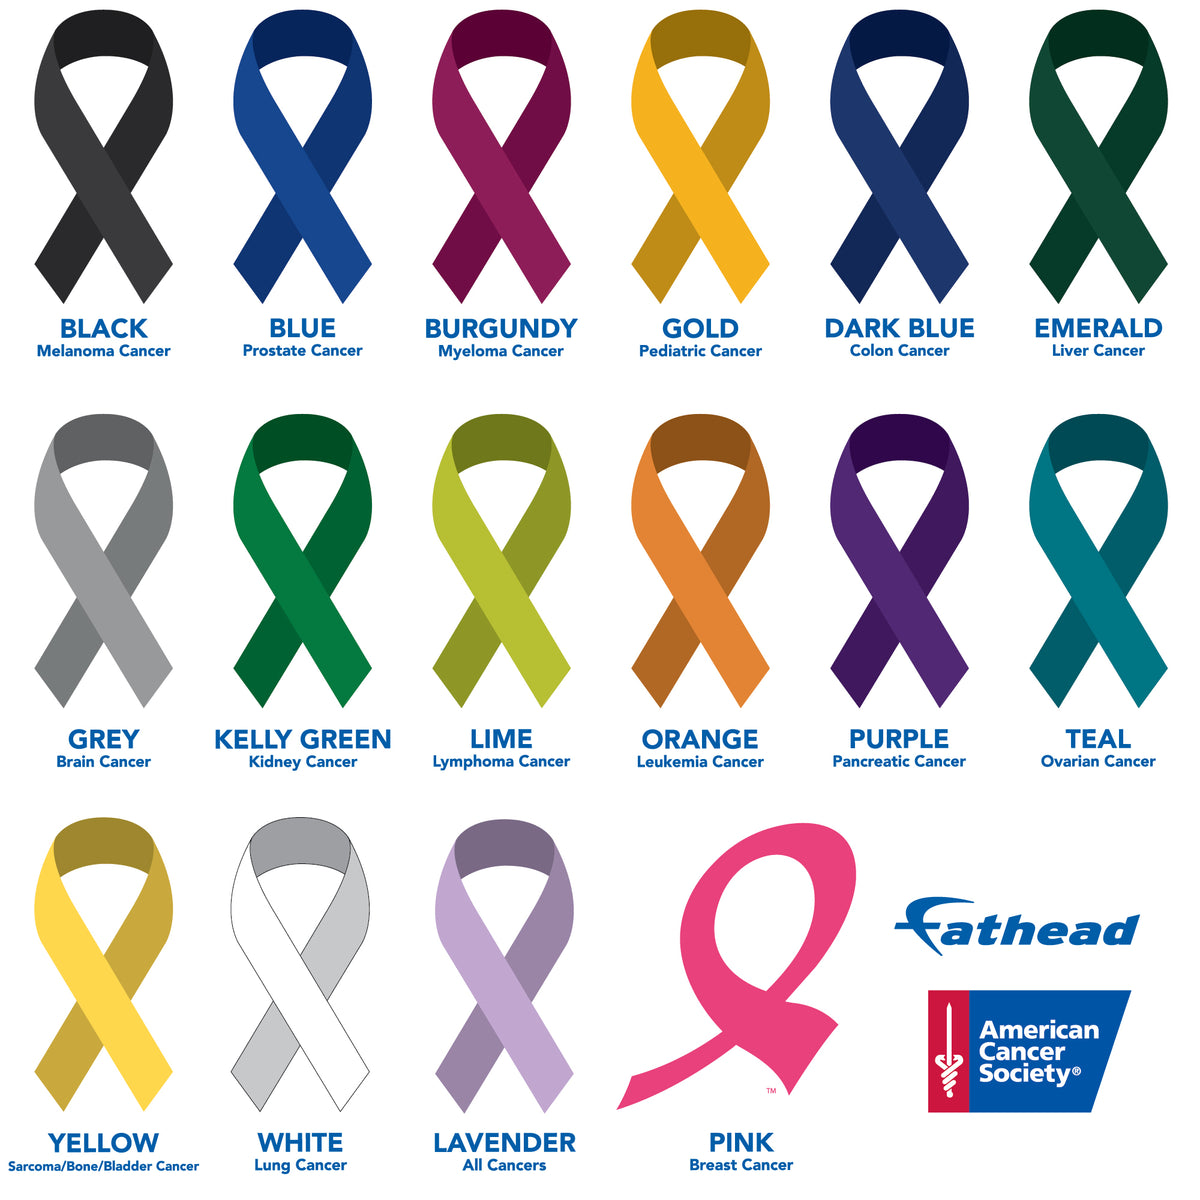 add-a-dark-blue-ribbon-for-colon-cancer-awareness-to-tb-john-bain-914